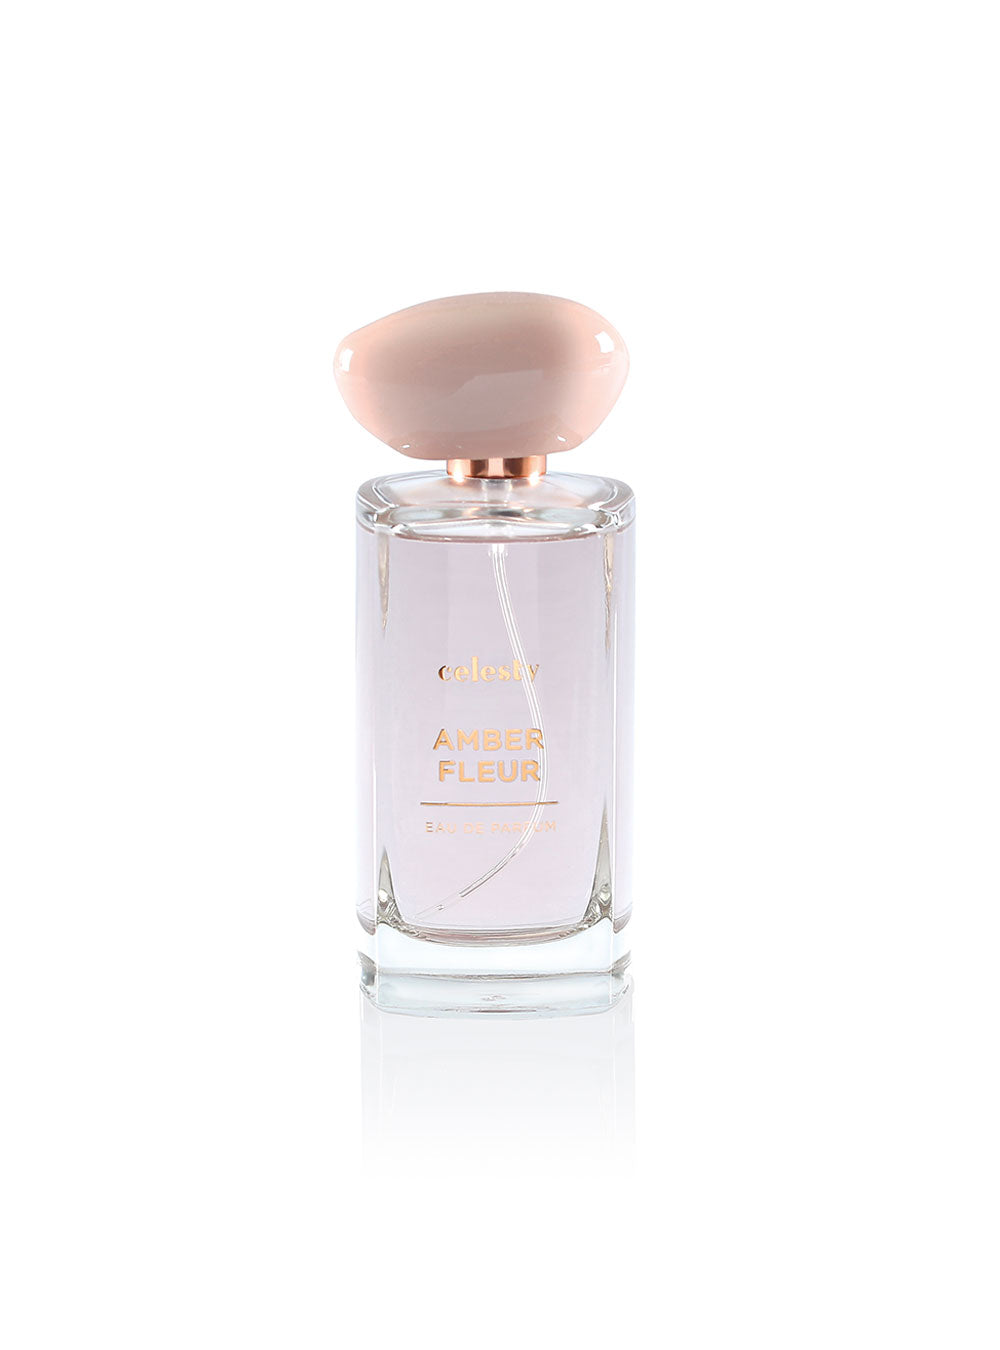 Celesty Amber Fleur Perfume EDP